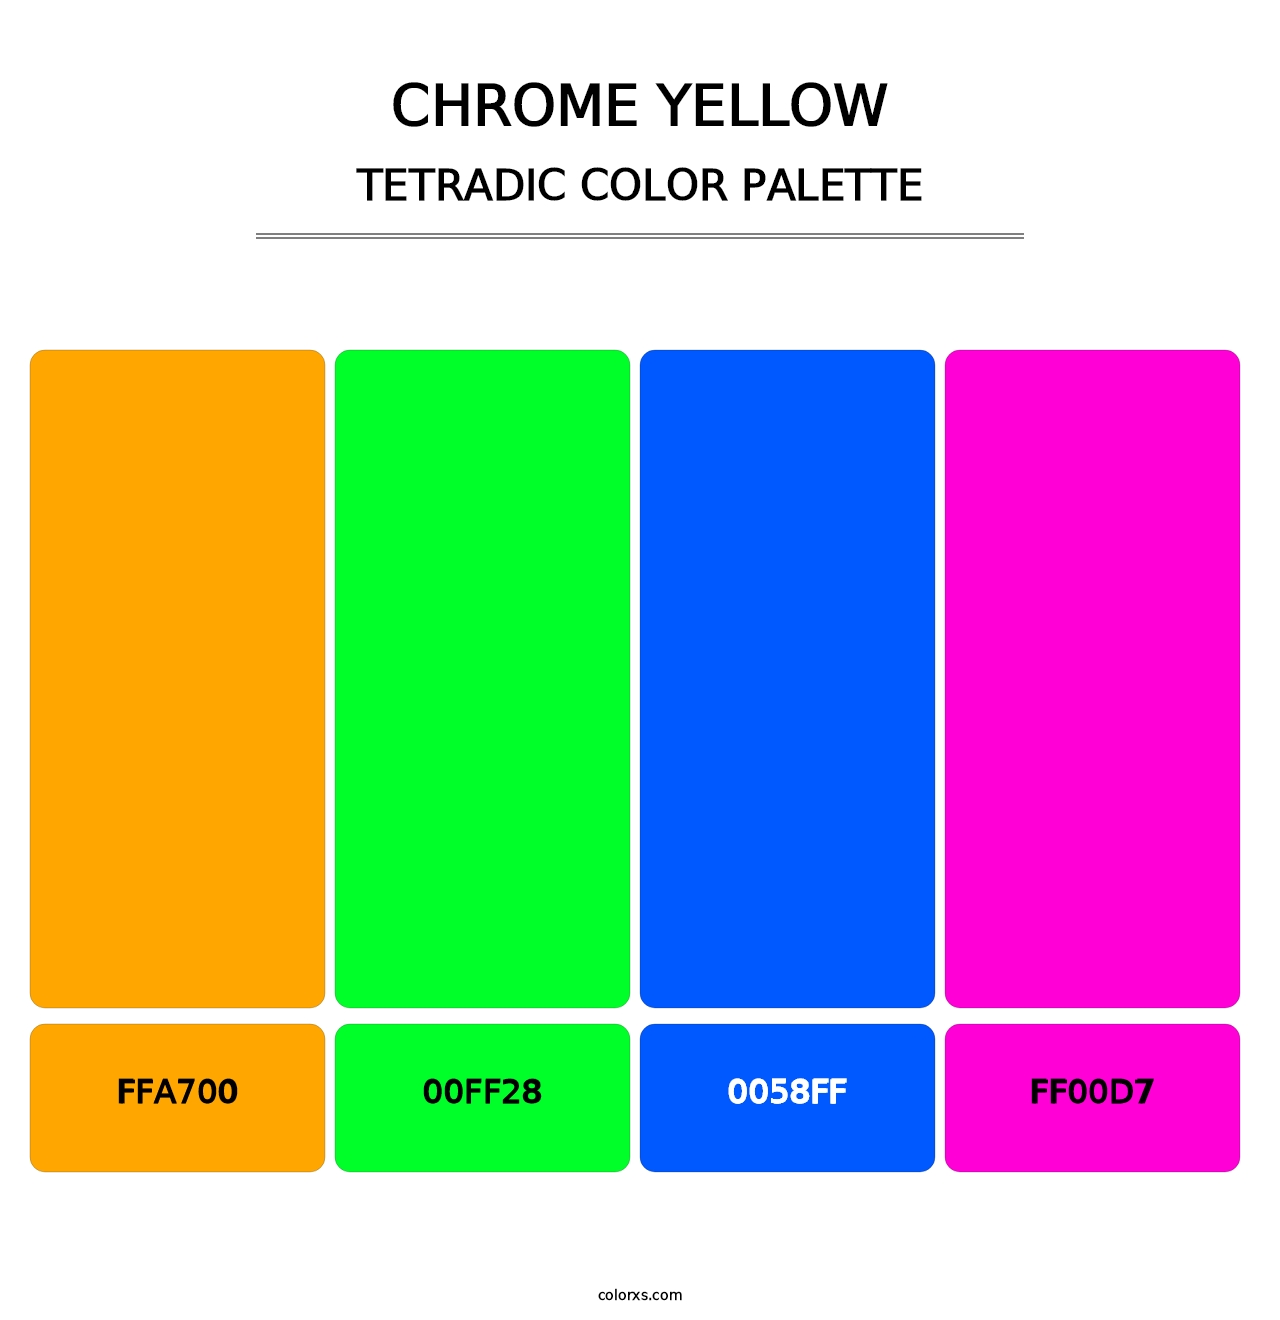 Chrome Yellow - Tetradic Color Palette